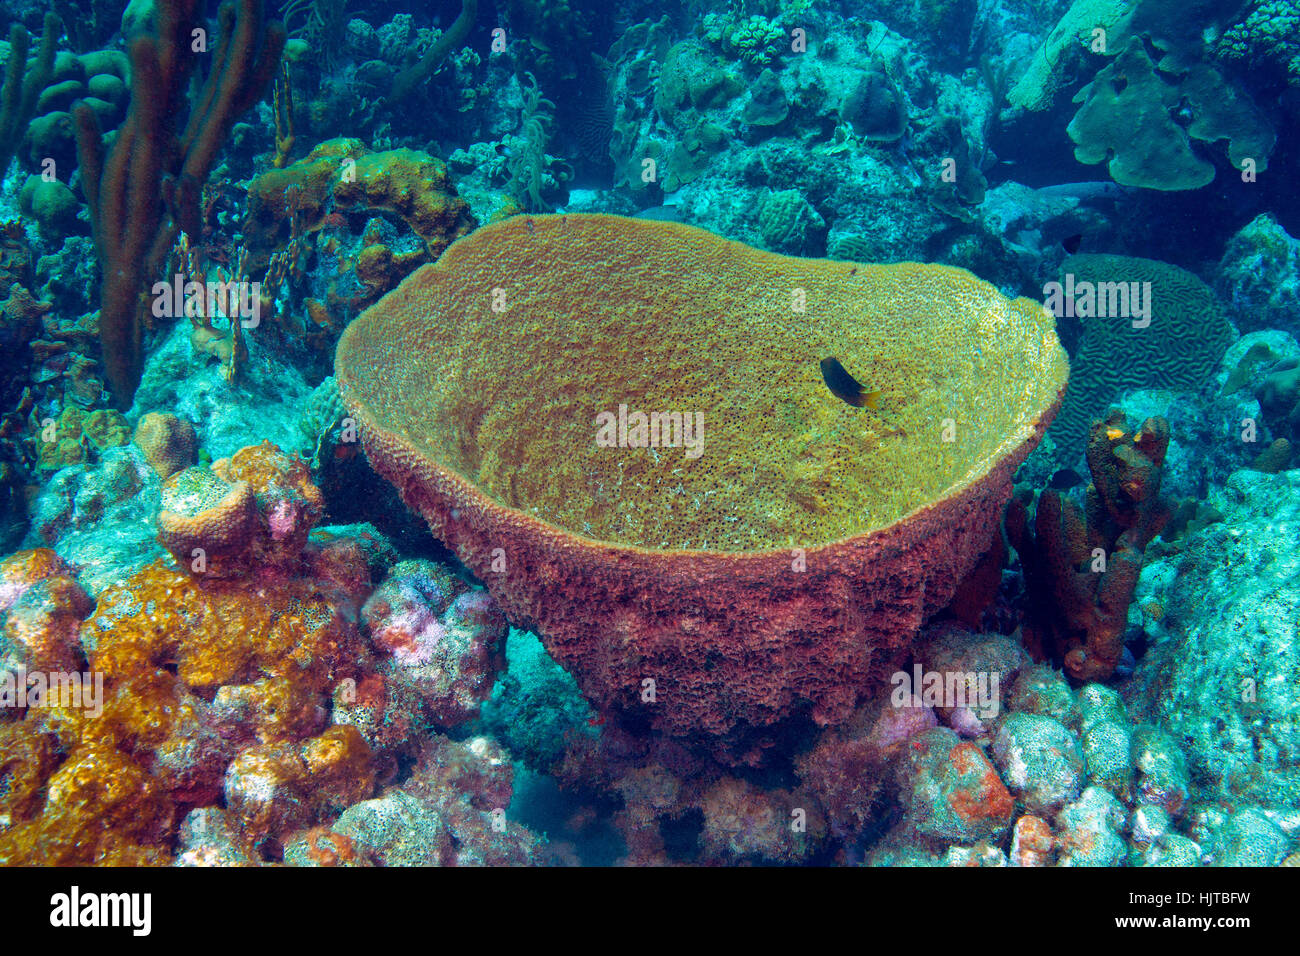 A Bell sponge, Ircinia campana, in a Caribbean reef. Stock Photo